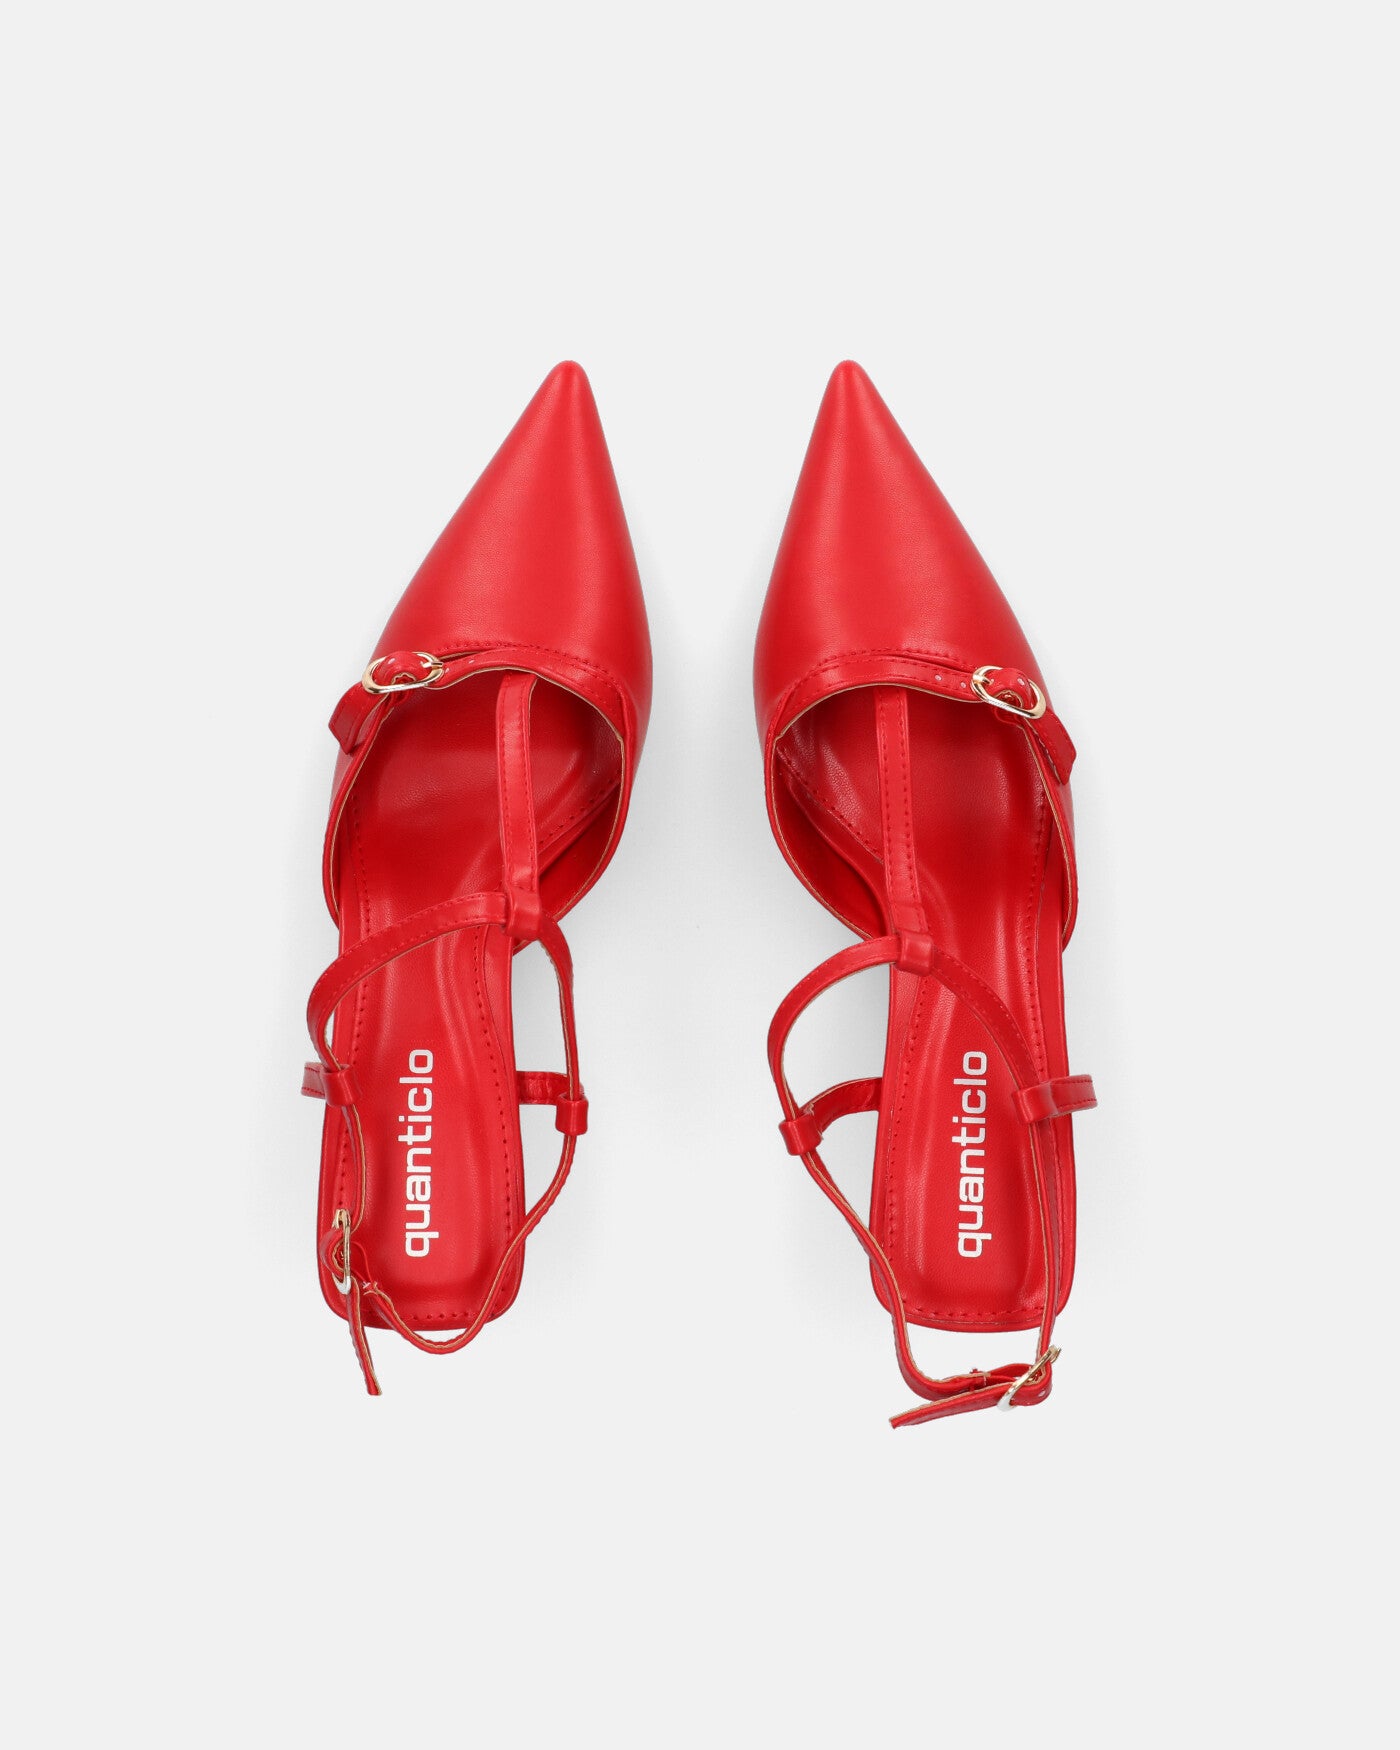 RASHIDA - red low heel pump